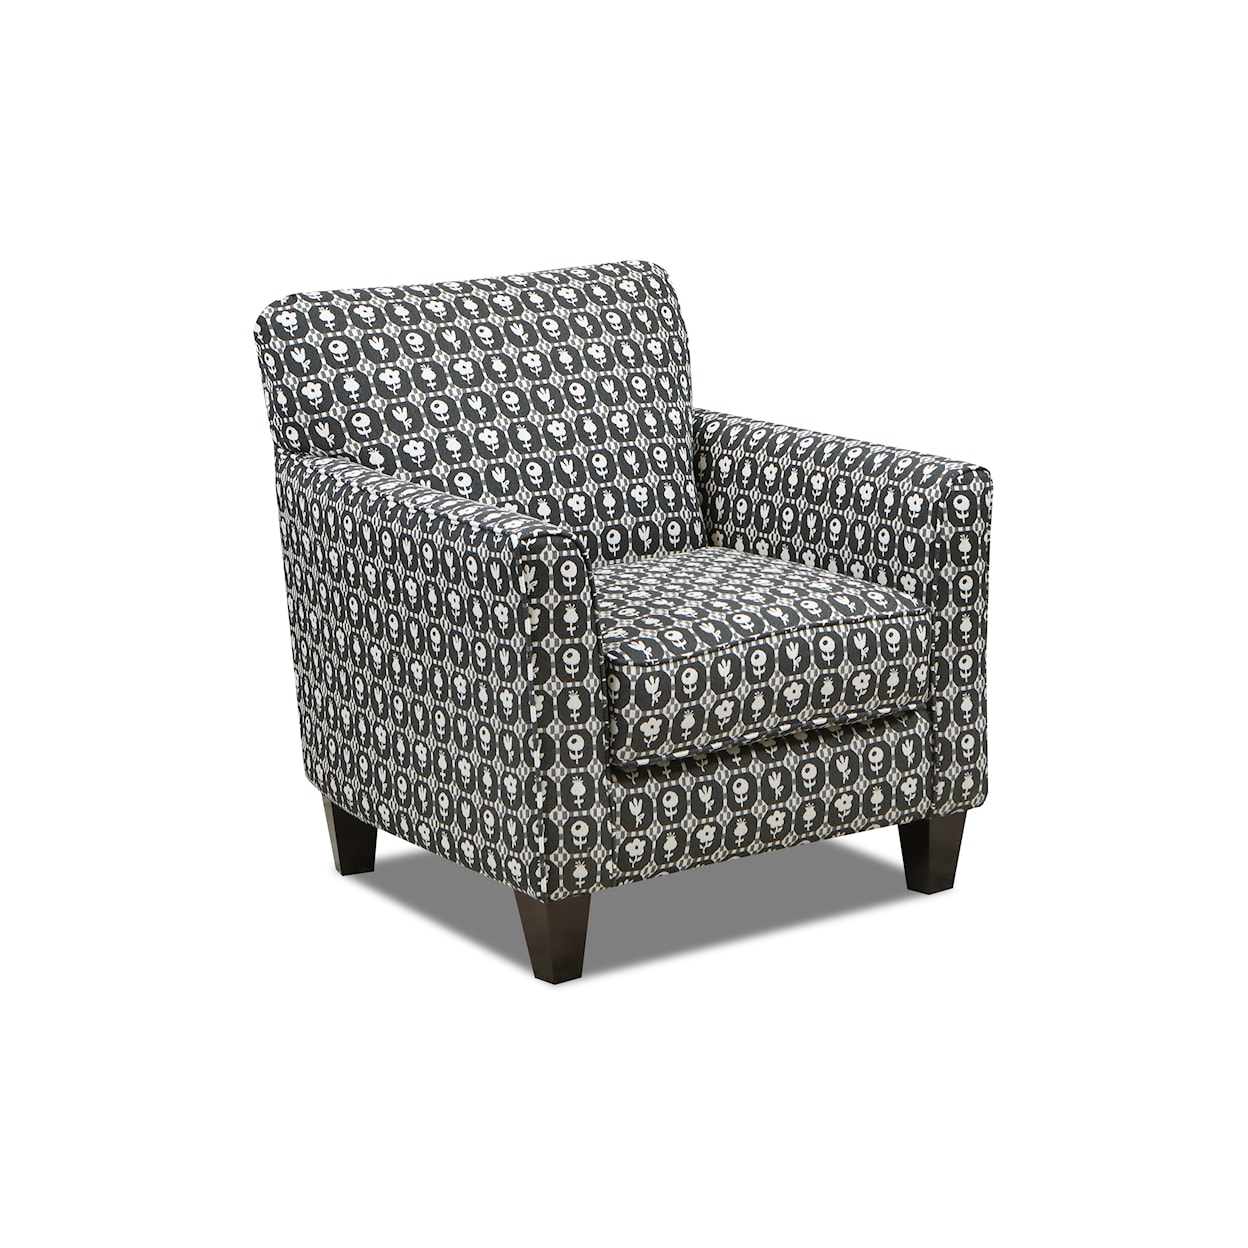 Fusion Furniture 28 MERIDA CLOVE Accent Chair